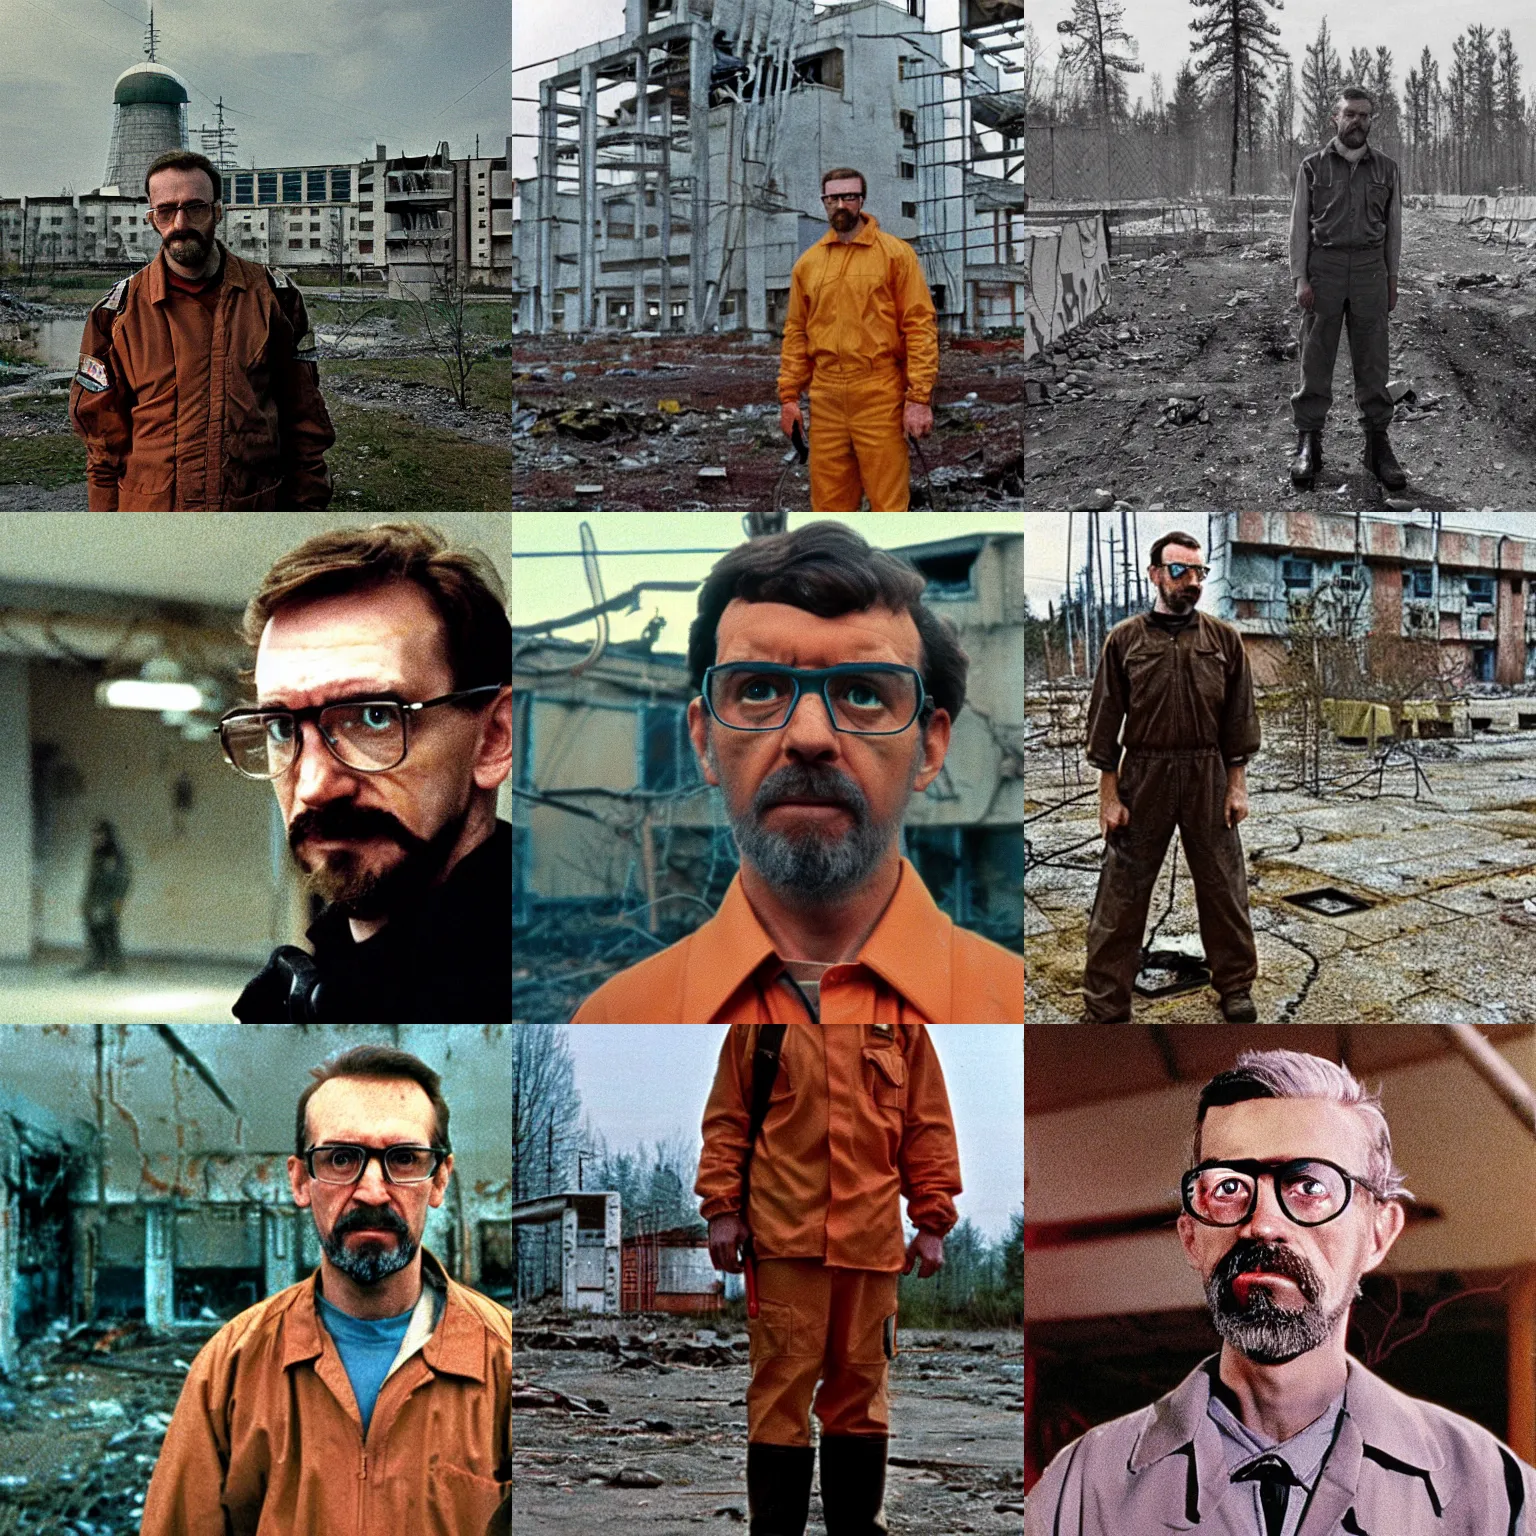 Prompt: gordon freeman in chernobyl, 1 9 8 9, ussr